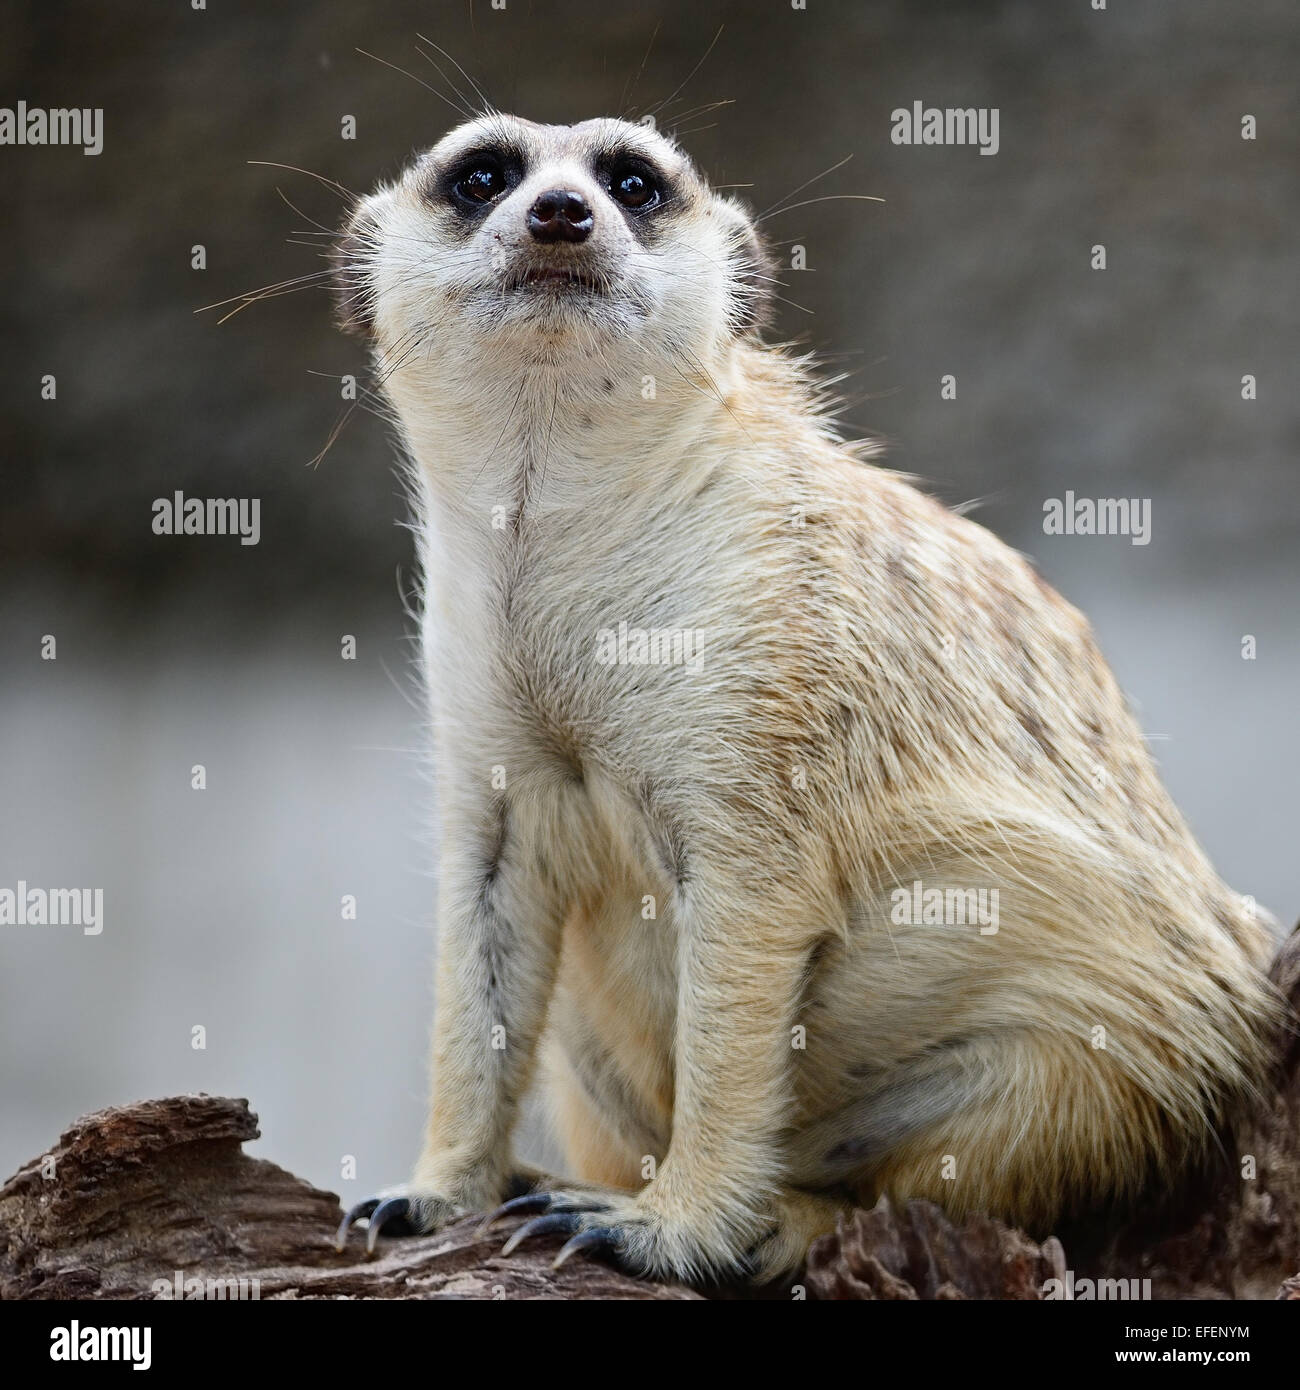 Suricate or Meerkat (Suricata suricatta), sitting on the log Stock Photo